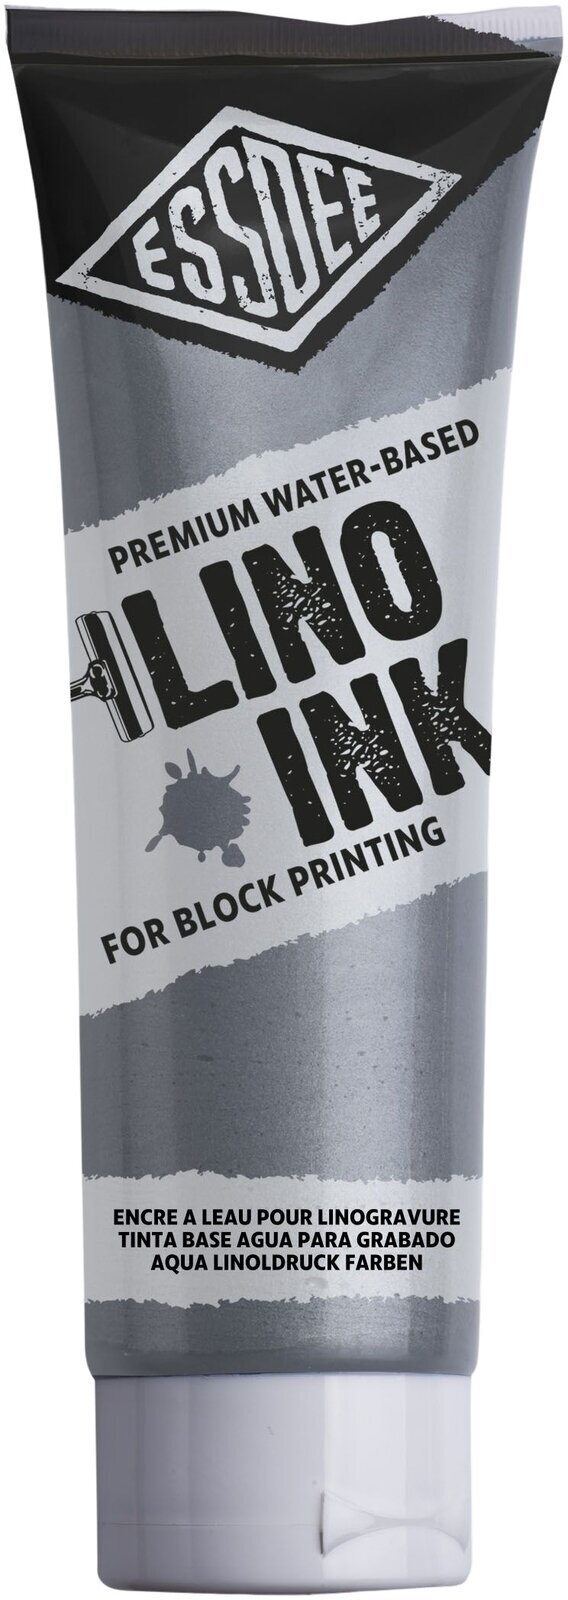 Vernice per linoleografia Essdee Block Printing Ink Vernice per linoleografia Metallic Silver 300 ml